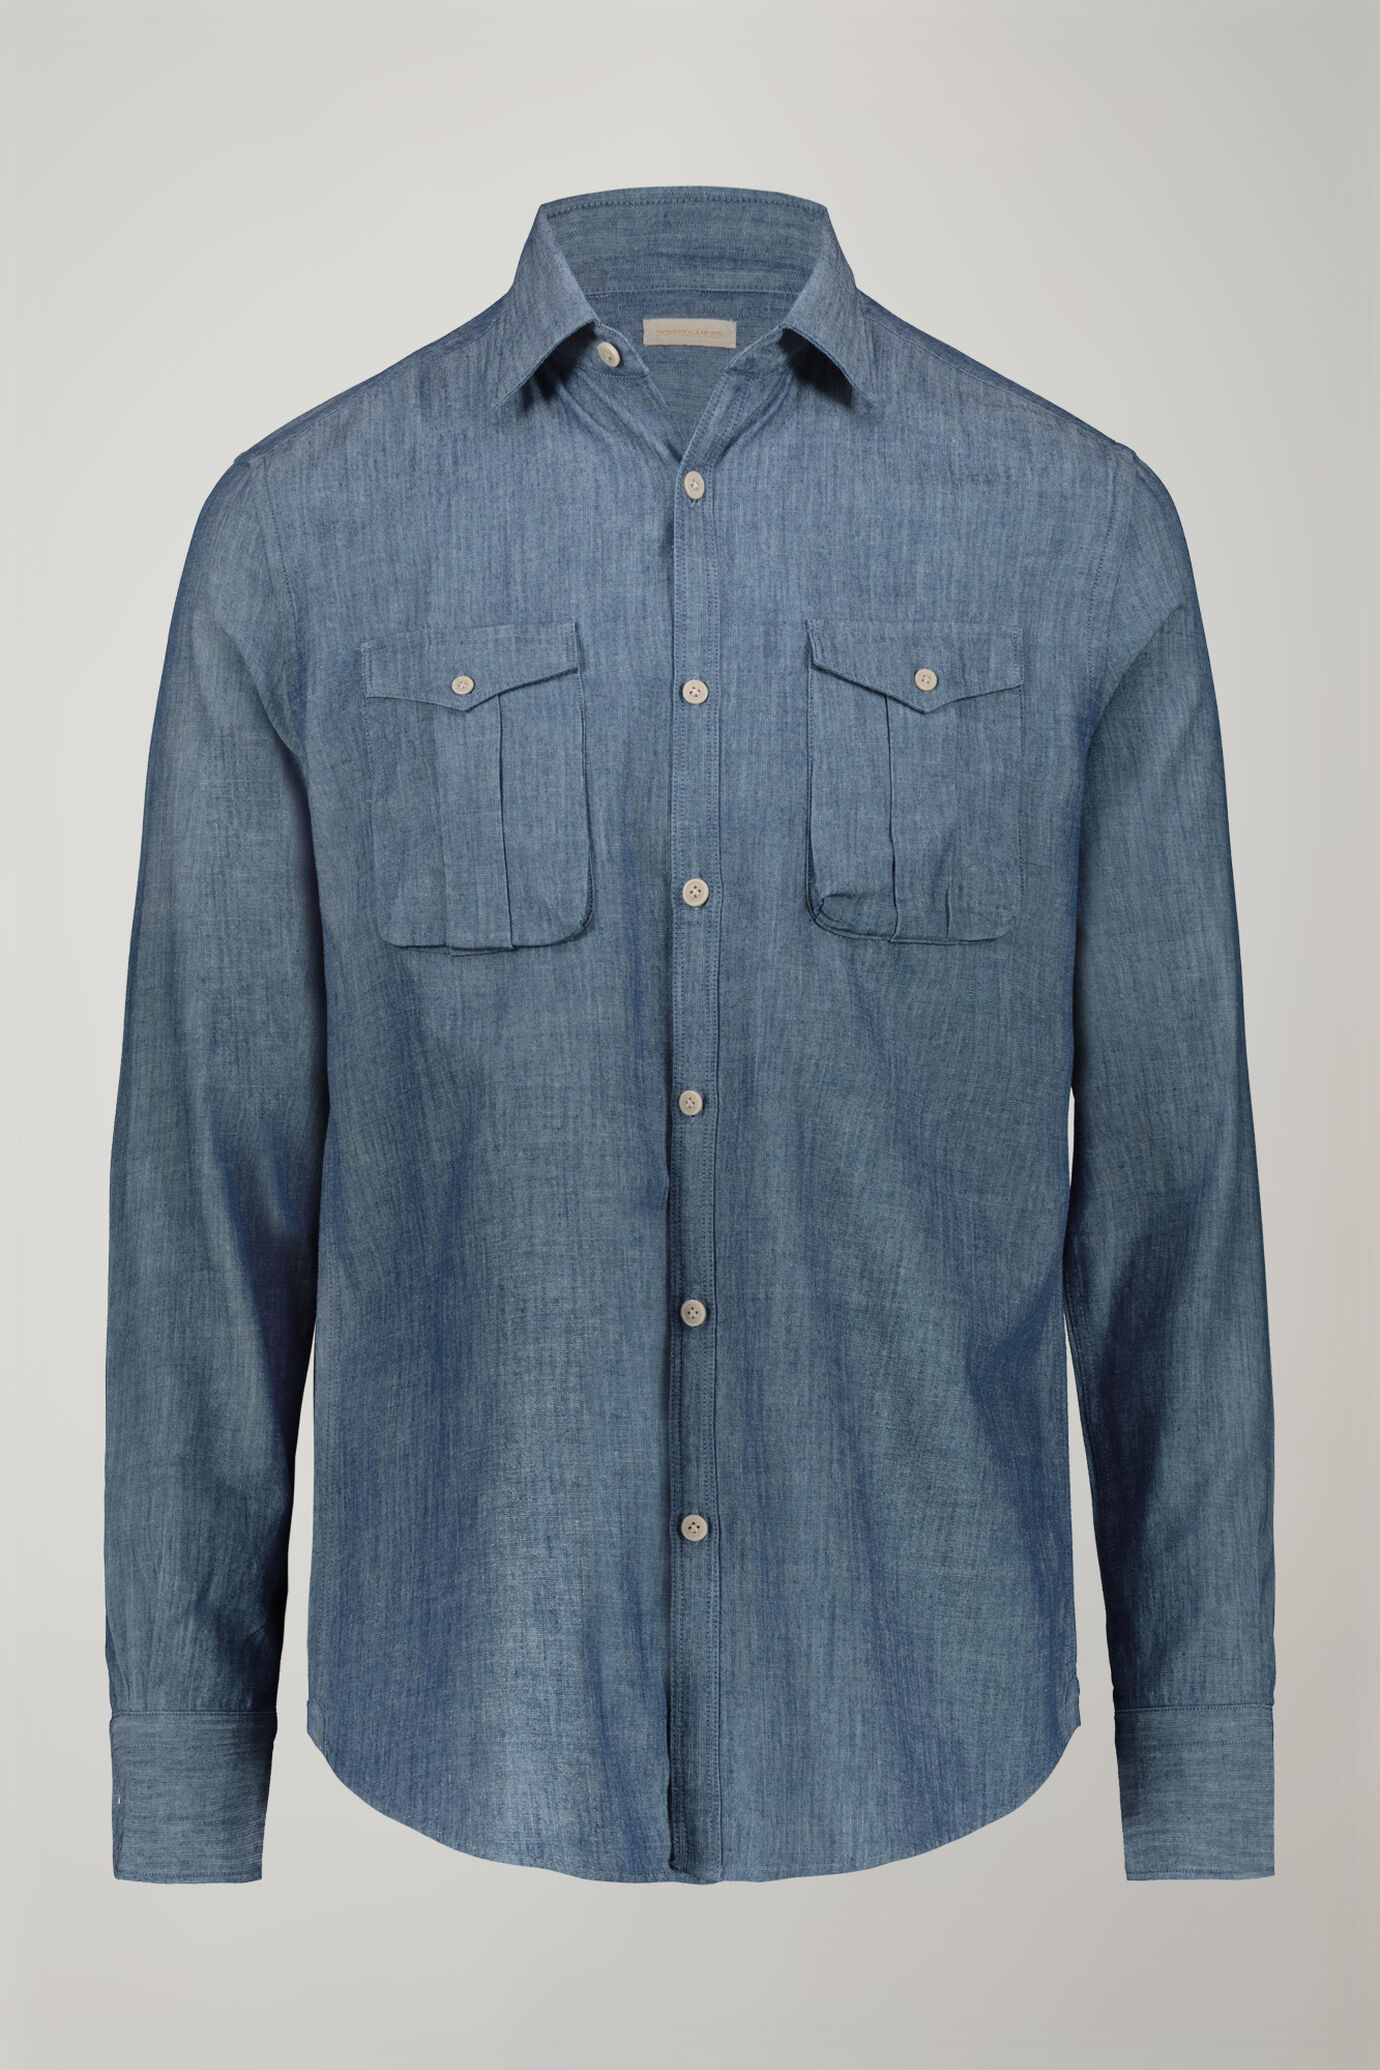 Camicia casual uomo collo classico 100% cotone tessuto denim comfort fit image number 5